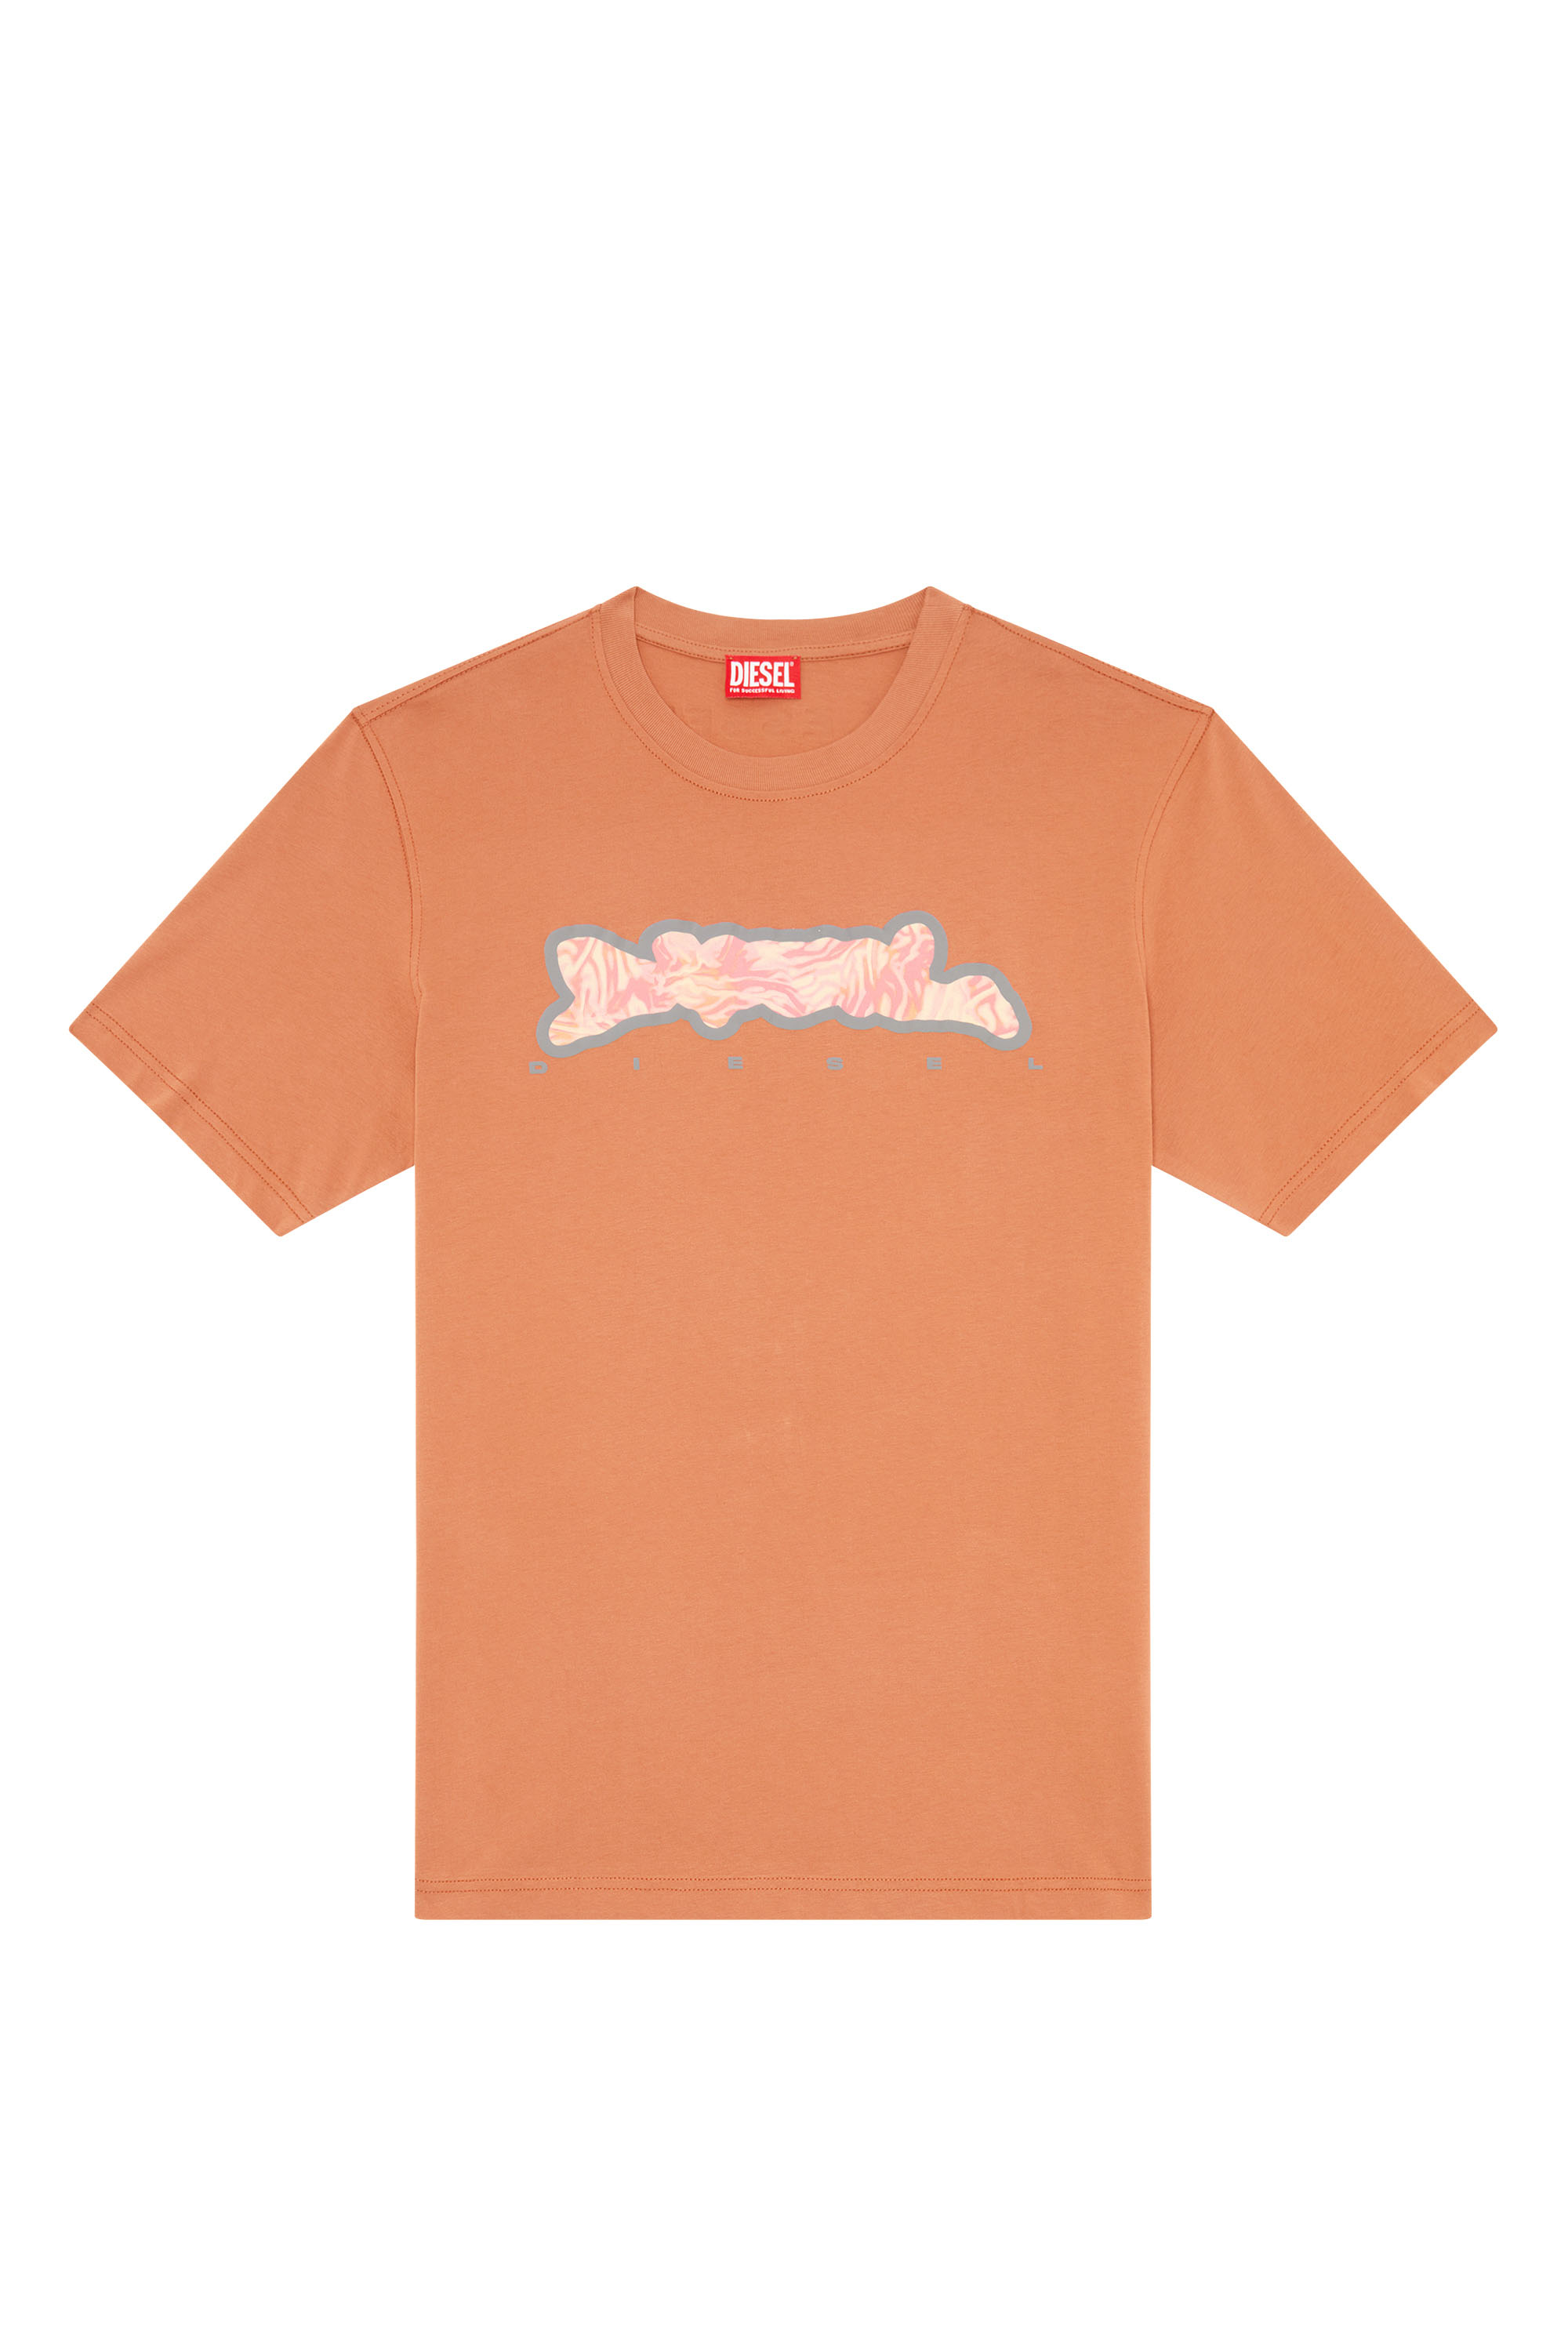 Diesel - T-JUST-N16, Hombre Camiseta con motivo de camuflaje de cebra in Naranja - Image 2